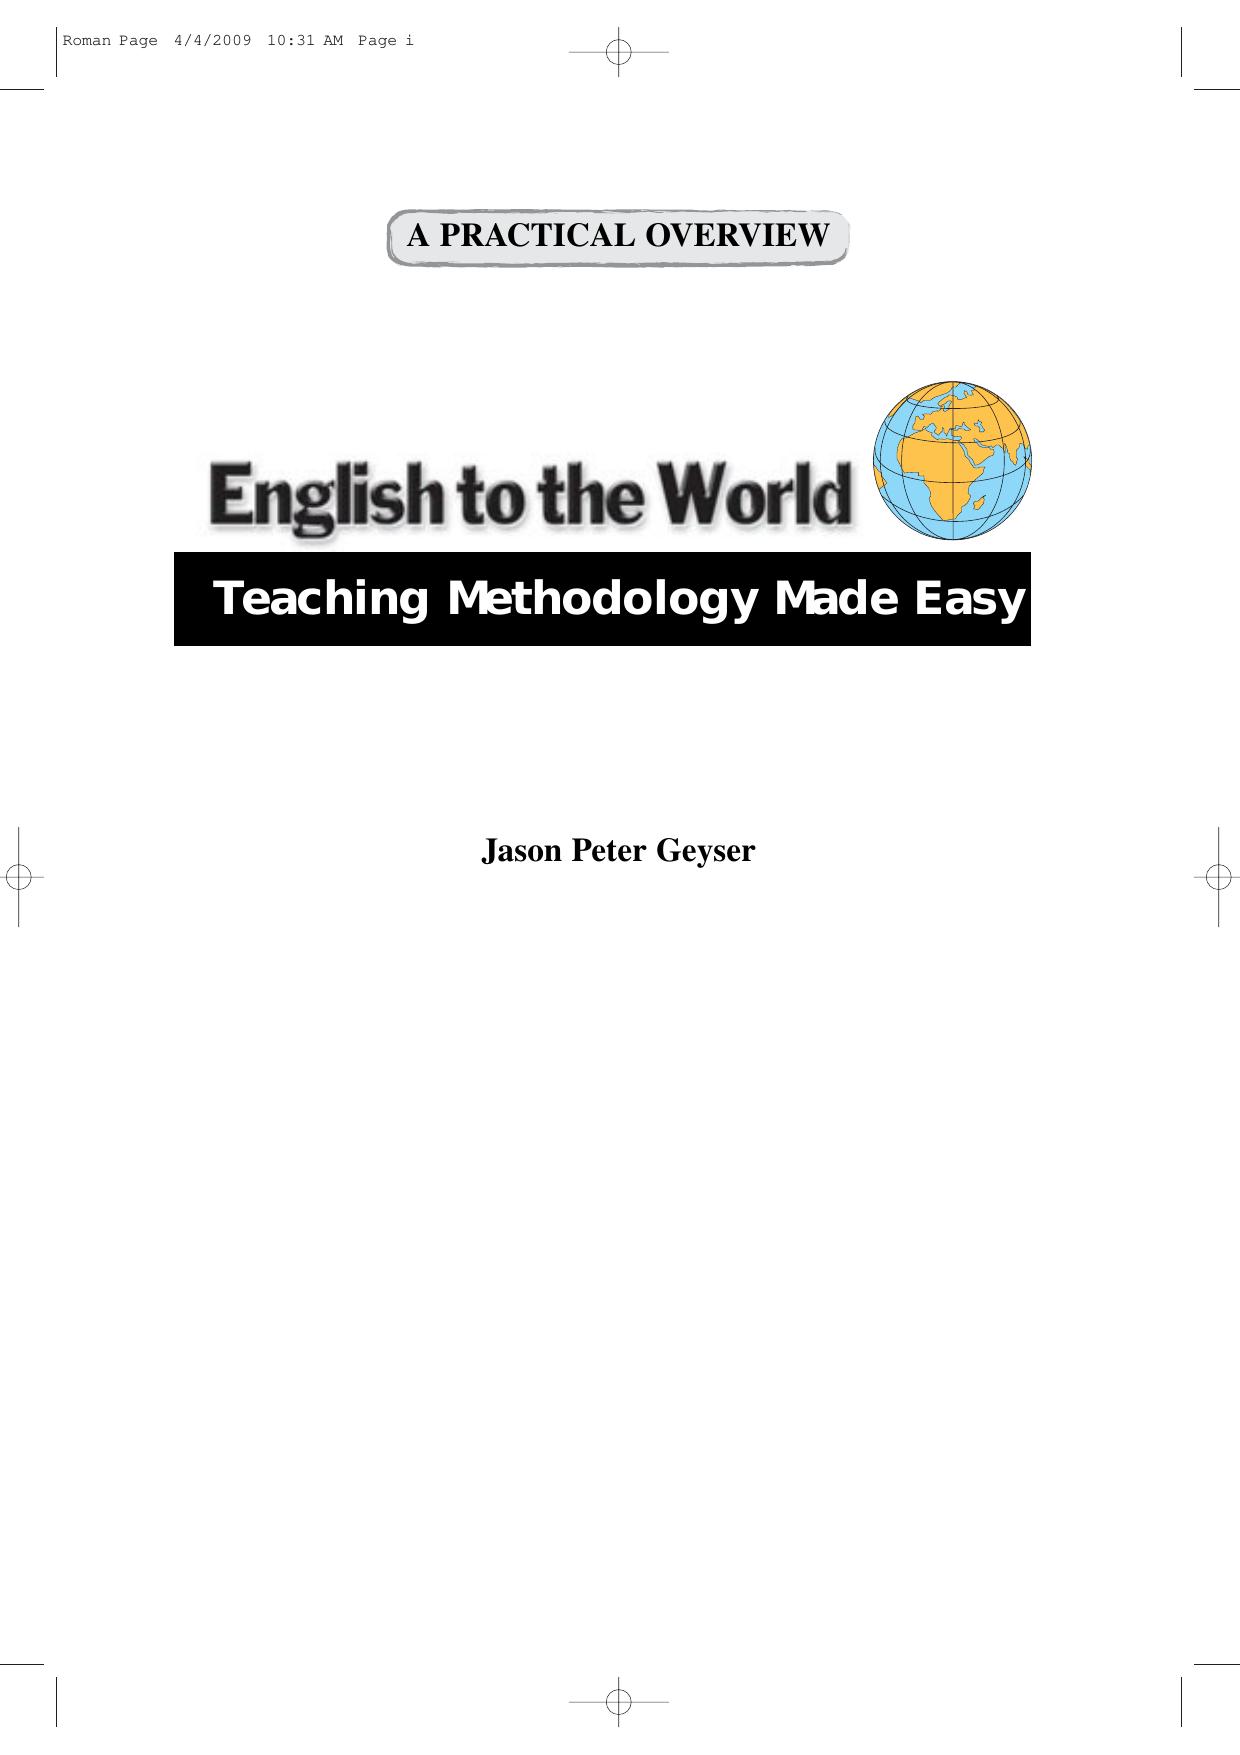 Teaching-Methodology  2009